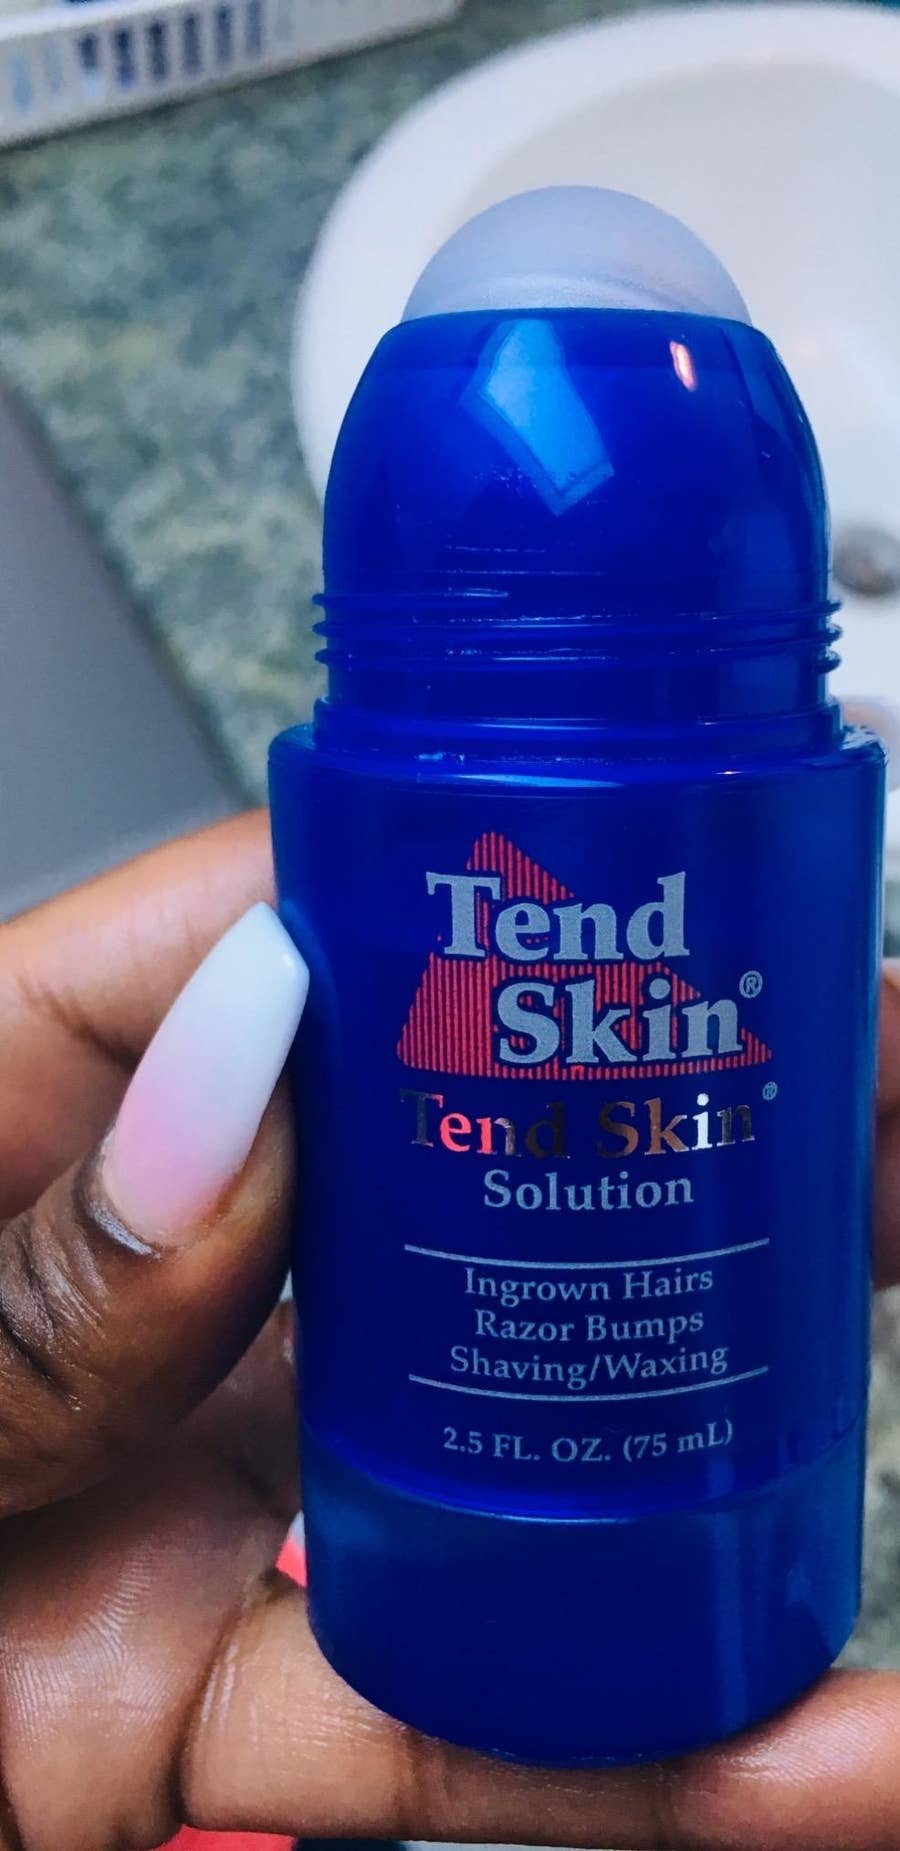 Tend Skin Razor Burn and Ingrown Hair Kit-Tend skin 4ounce + Roll on 2.5  ounce